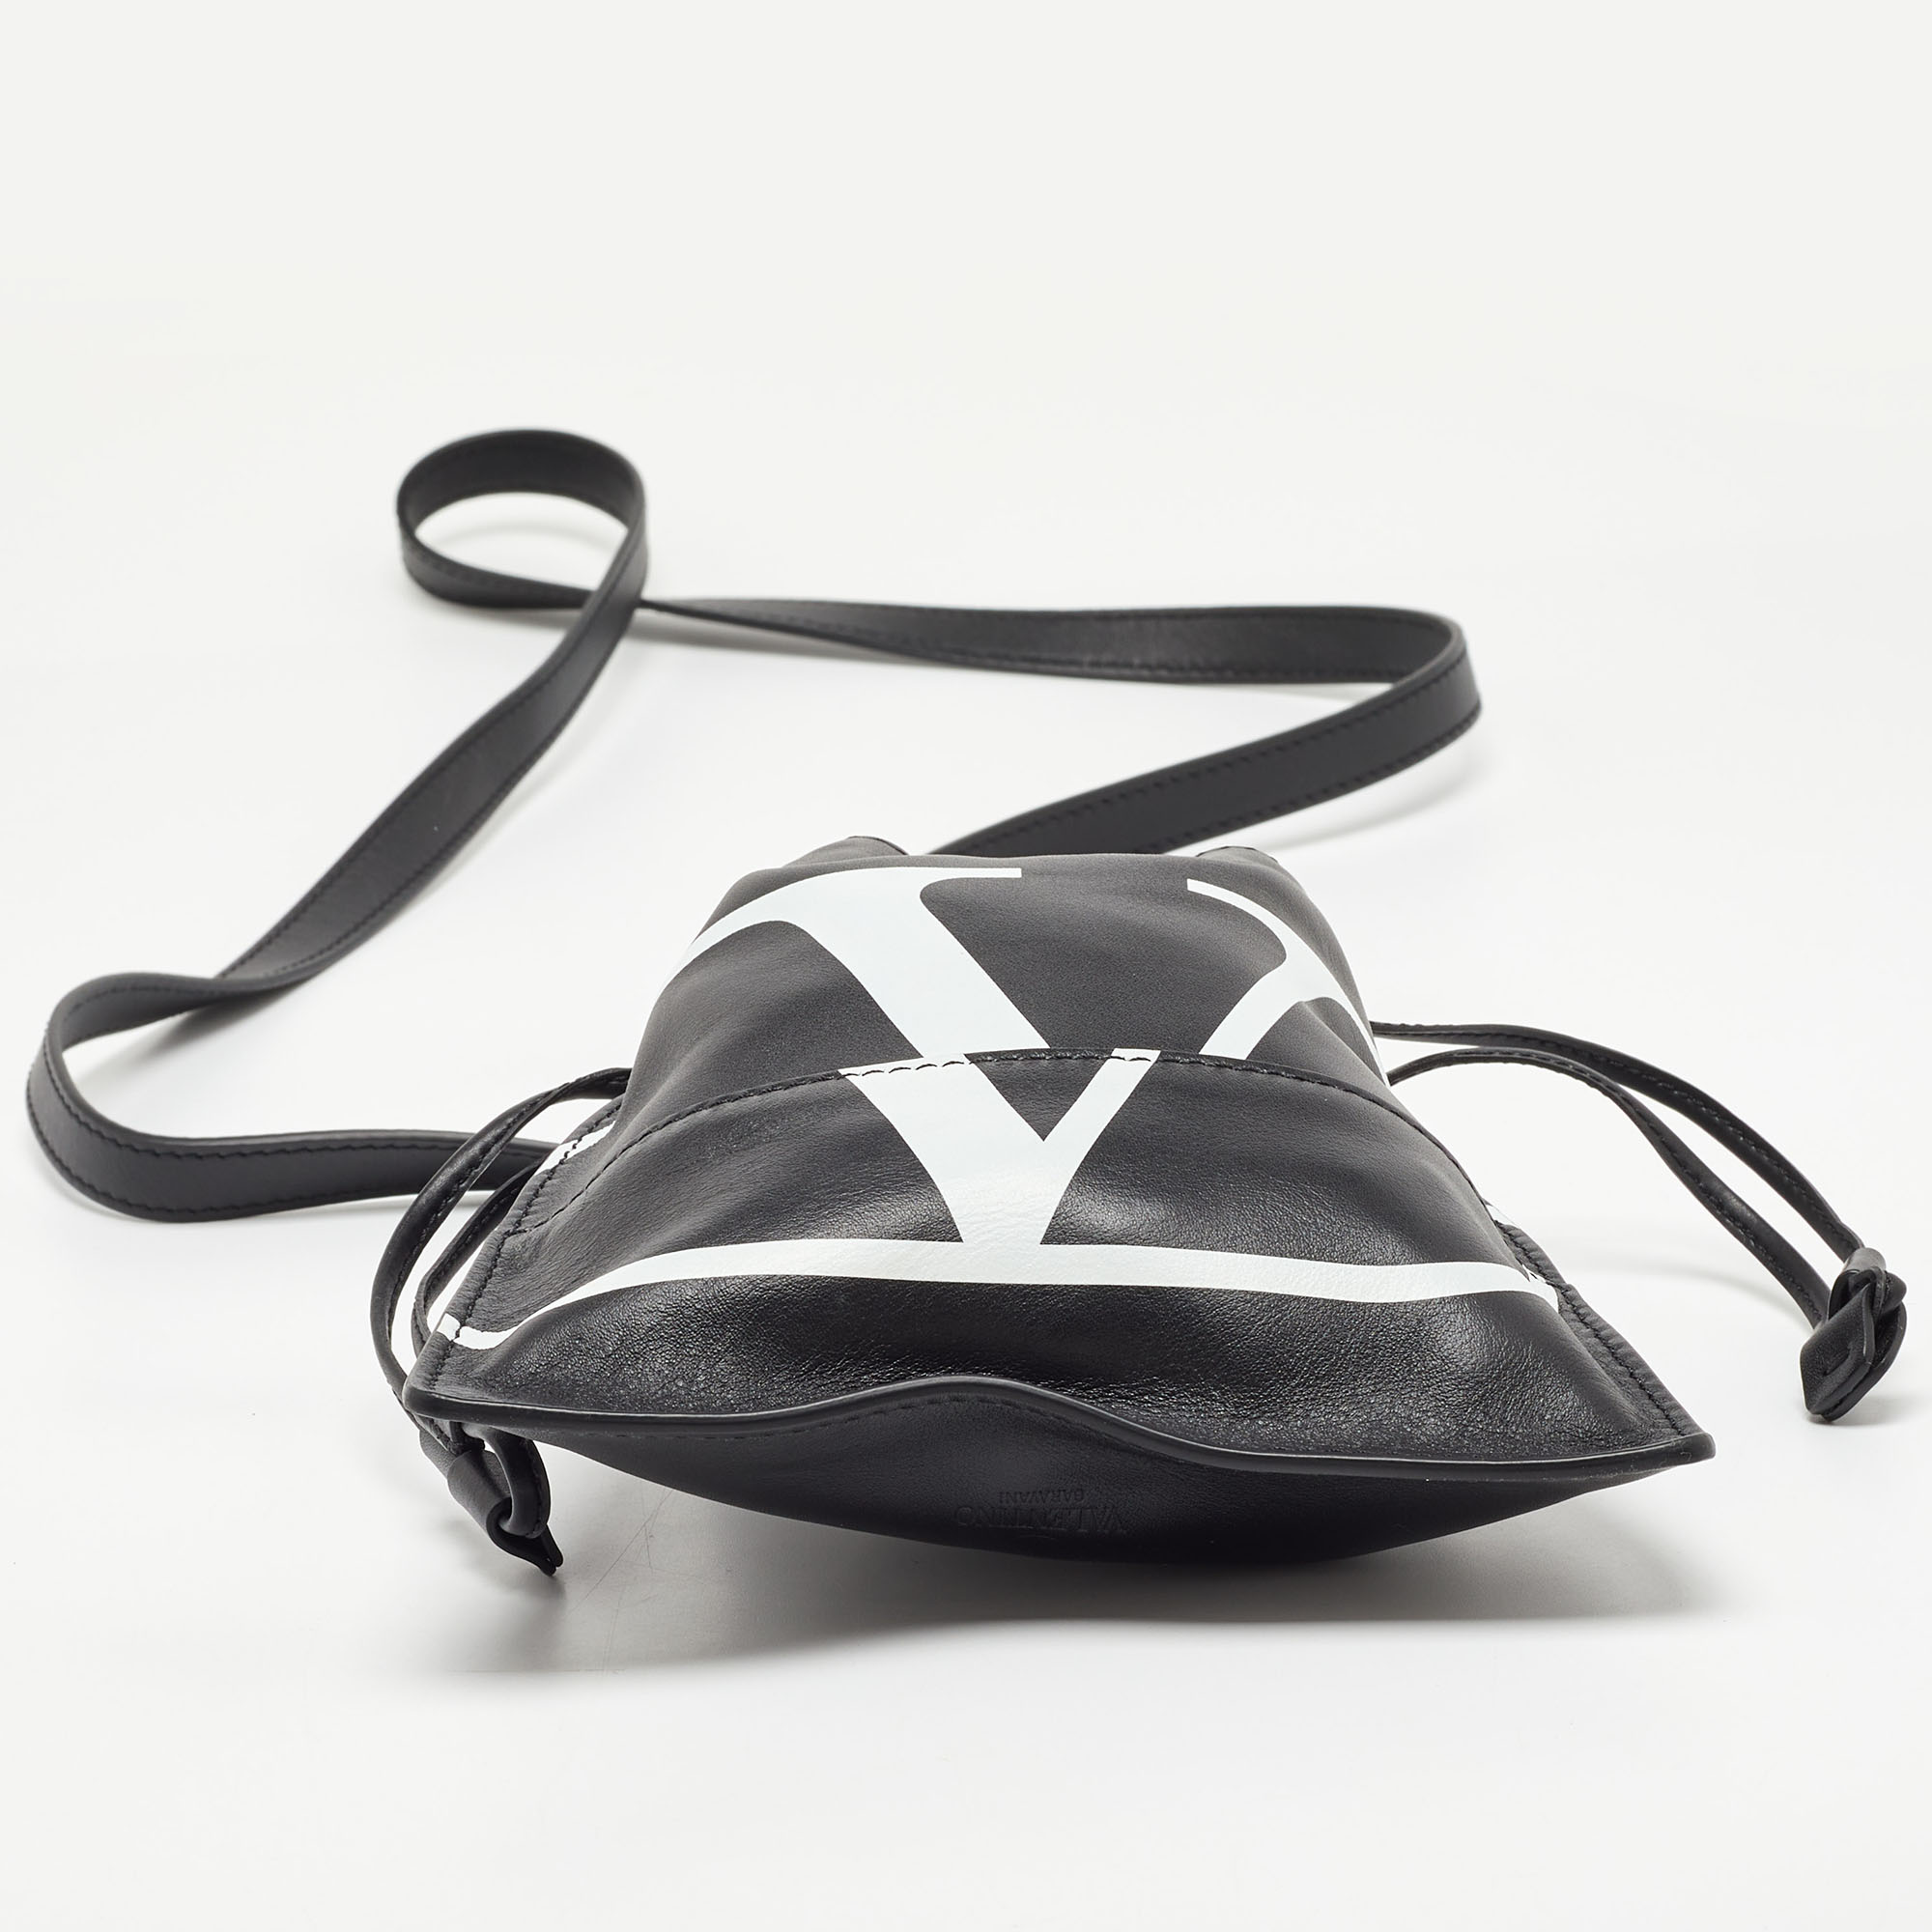 Valentino Black Leather VLogo Drawstring Pouch Bag